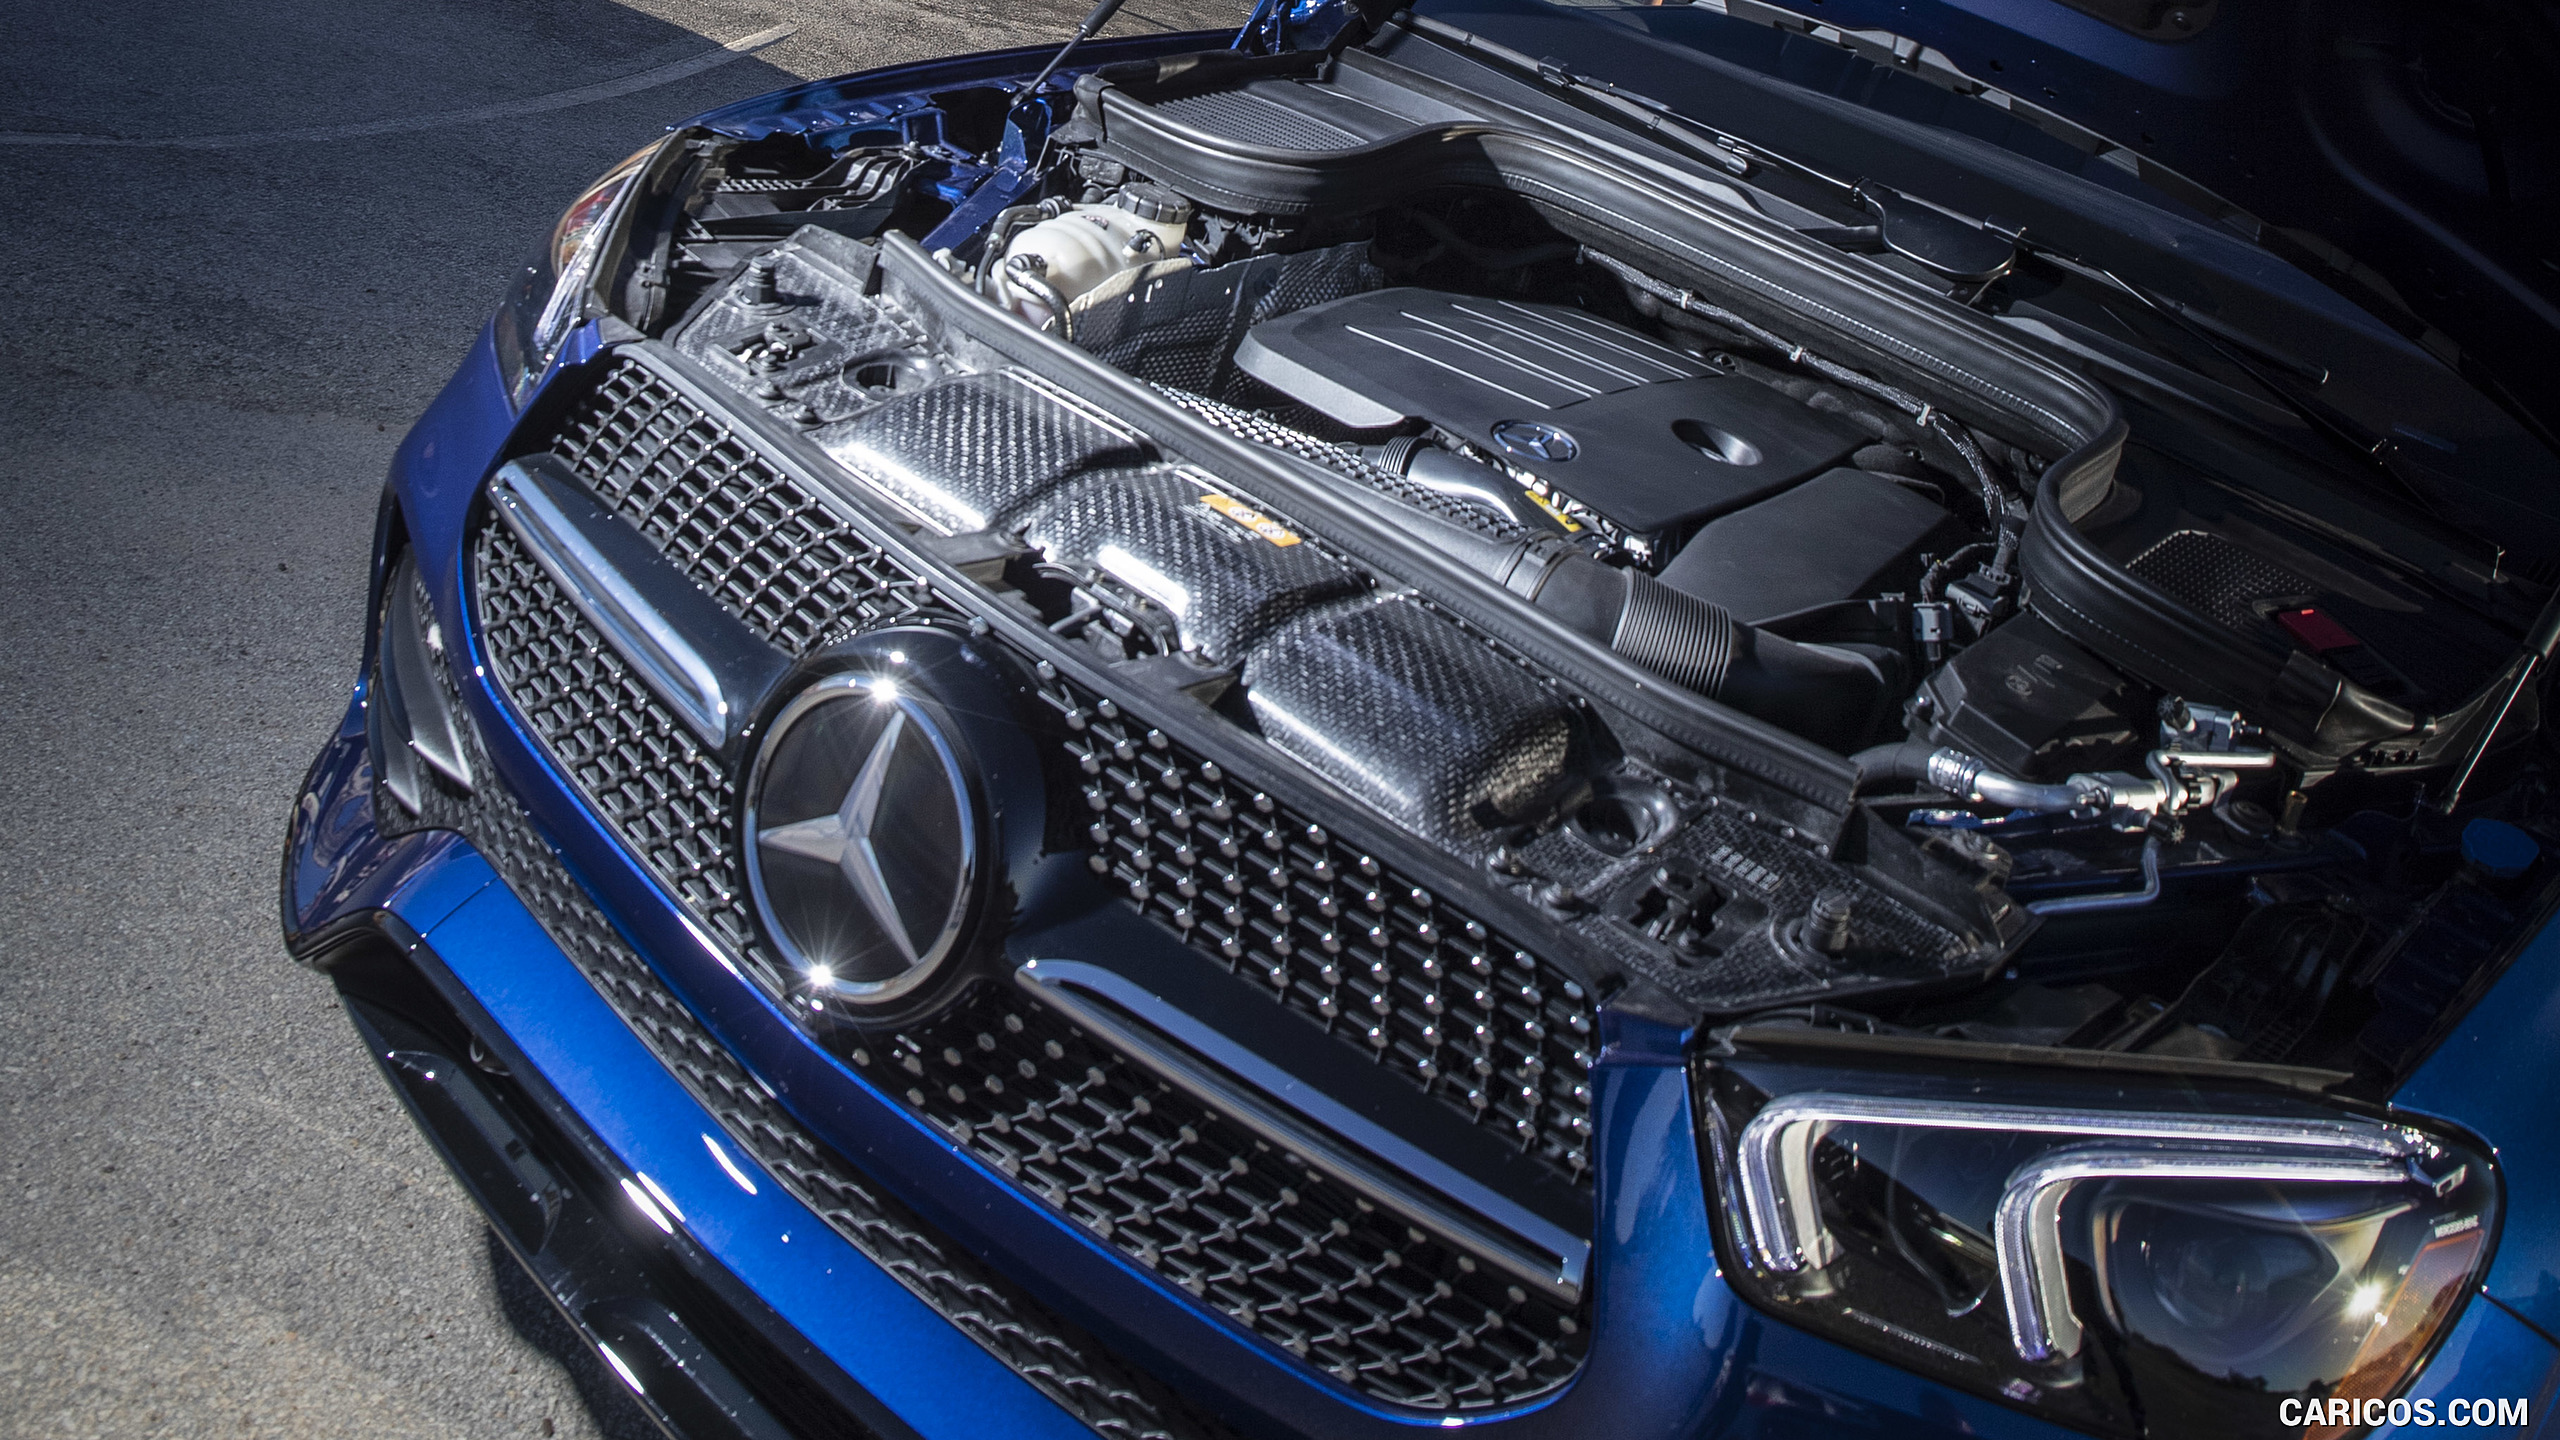 2020 Mercedes-Benz GLE 350 4MATIC (Color: Brilliant Blue; US-Spec) - Engine, #233 of 358